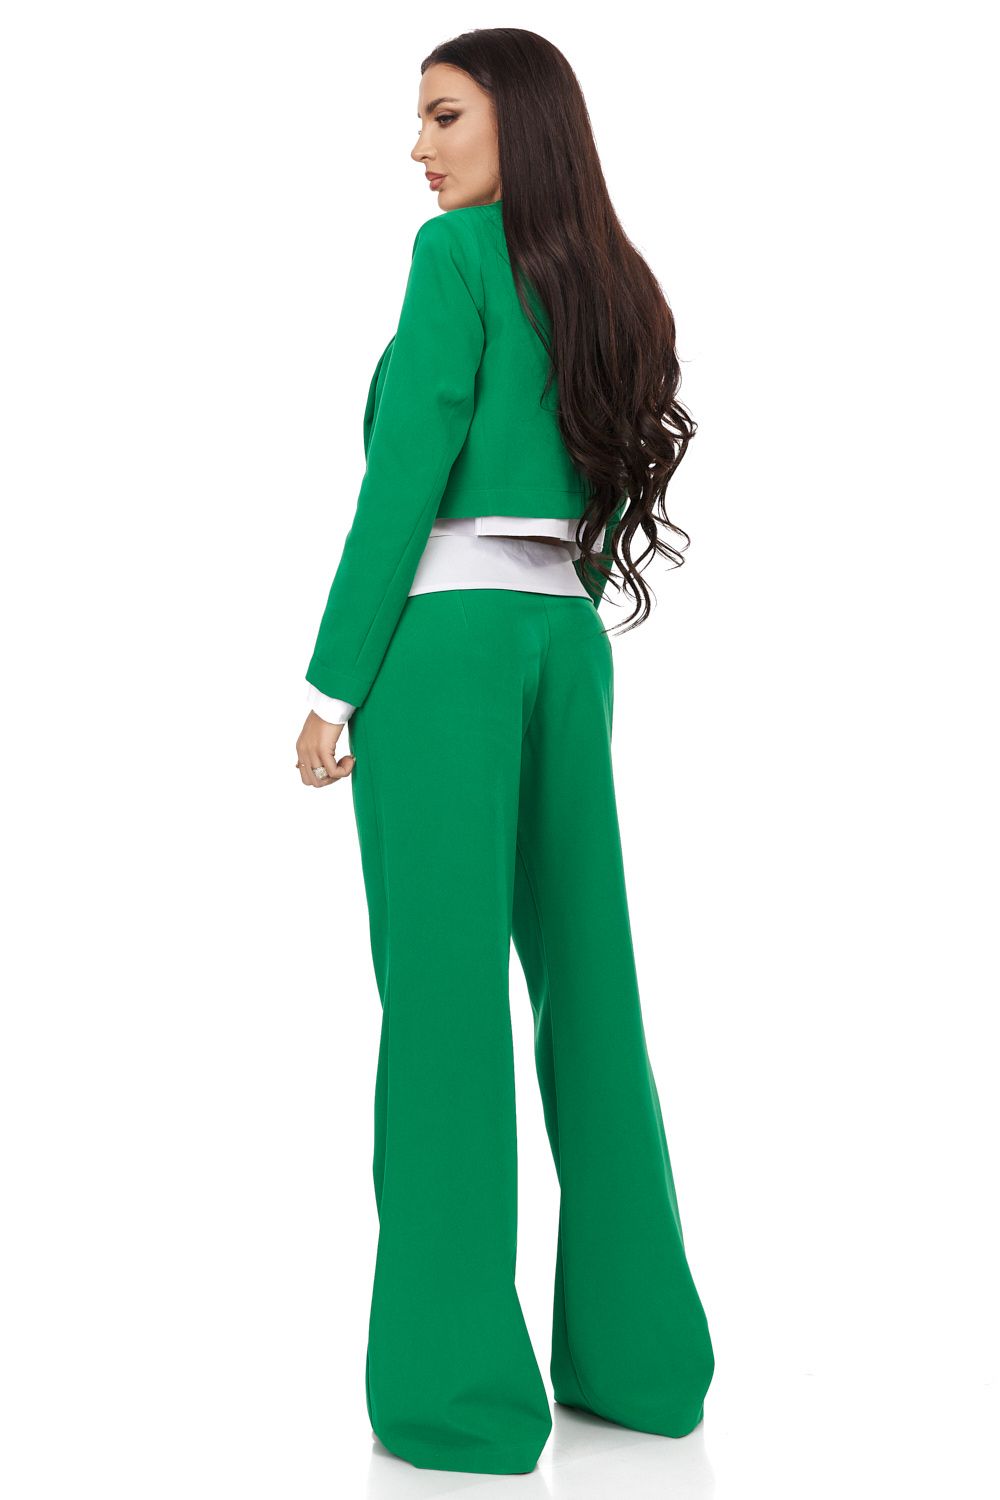 Lady's elegant green Rebira Bogas suit